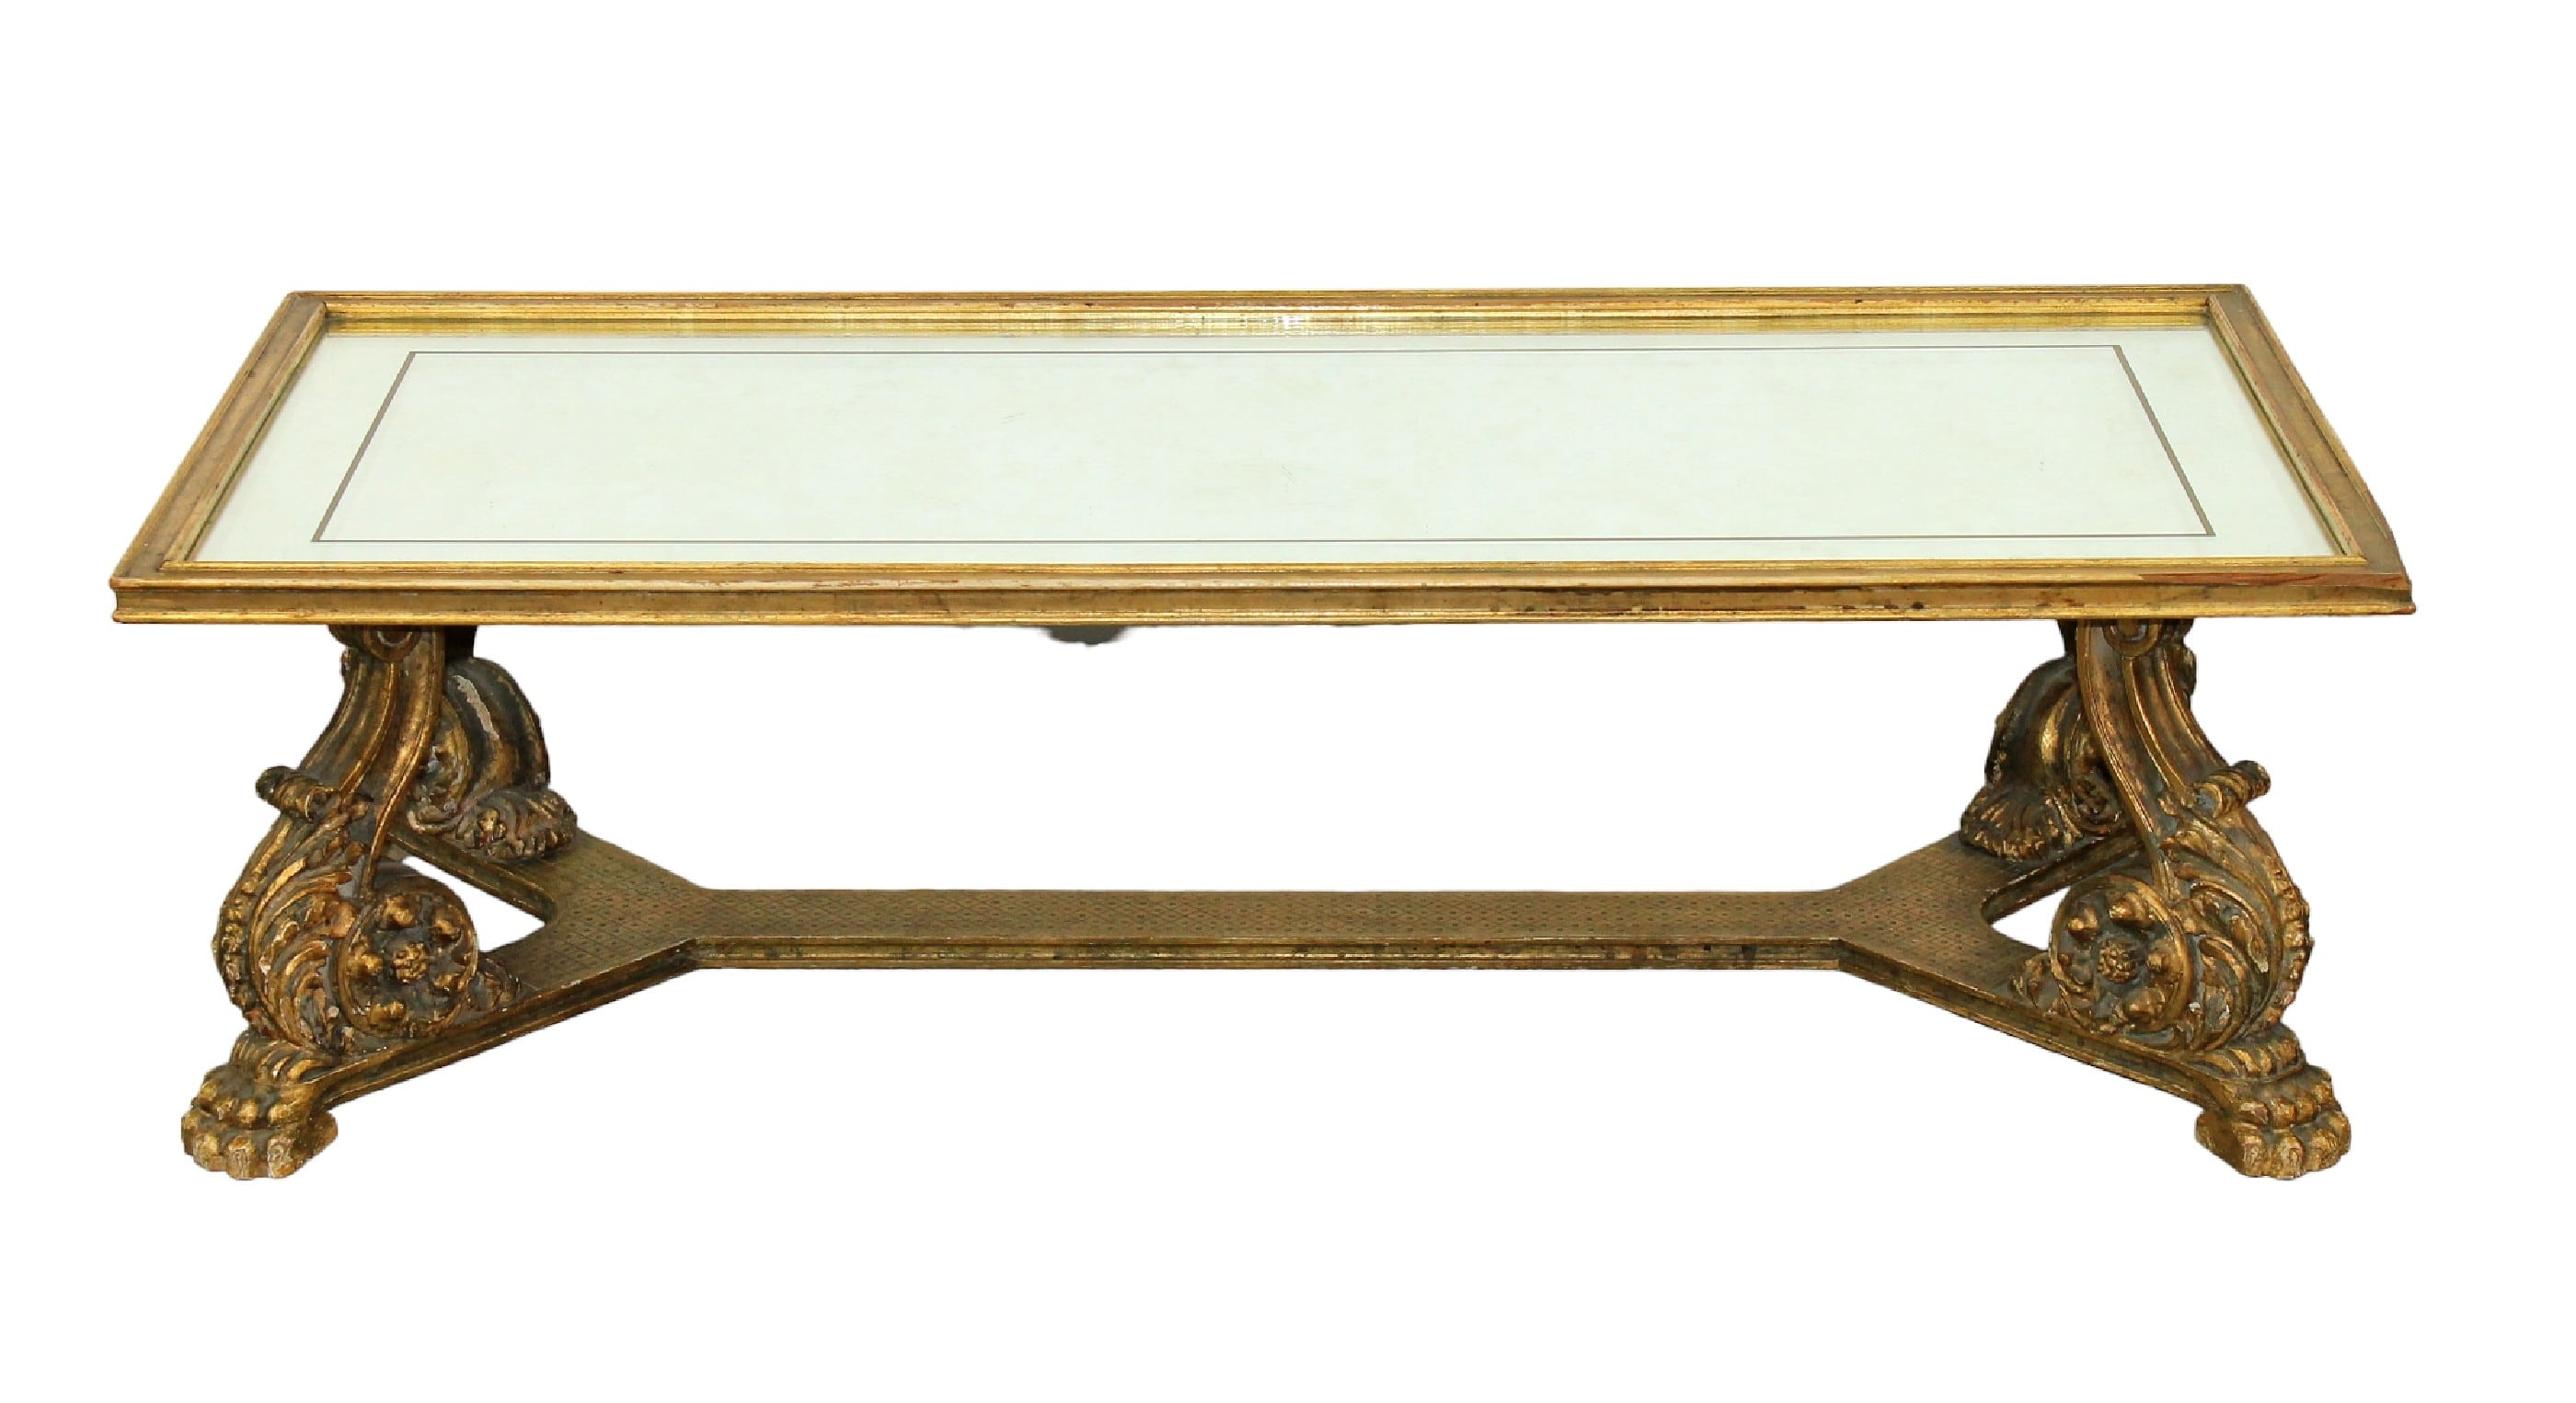 Italian giltwood coffee table with mirrored top